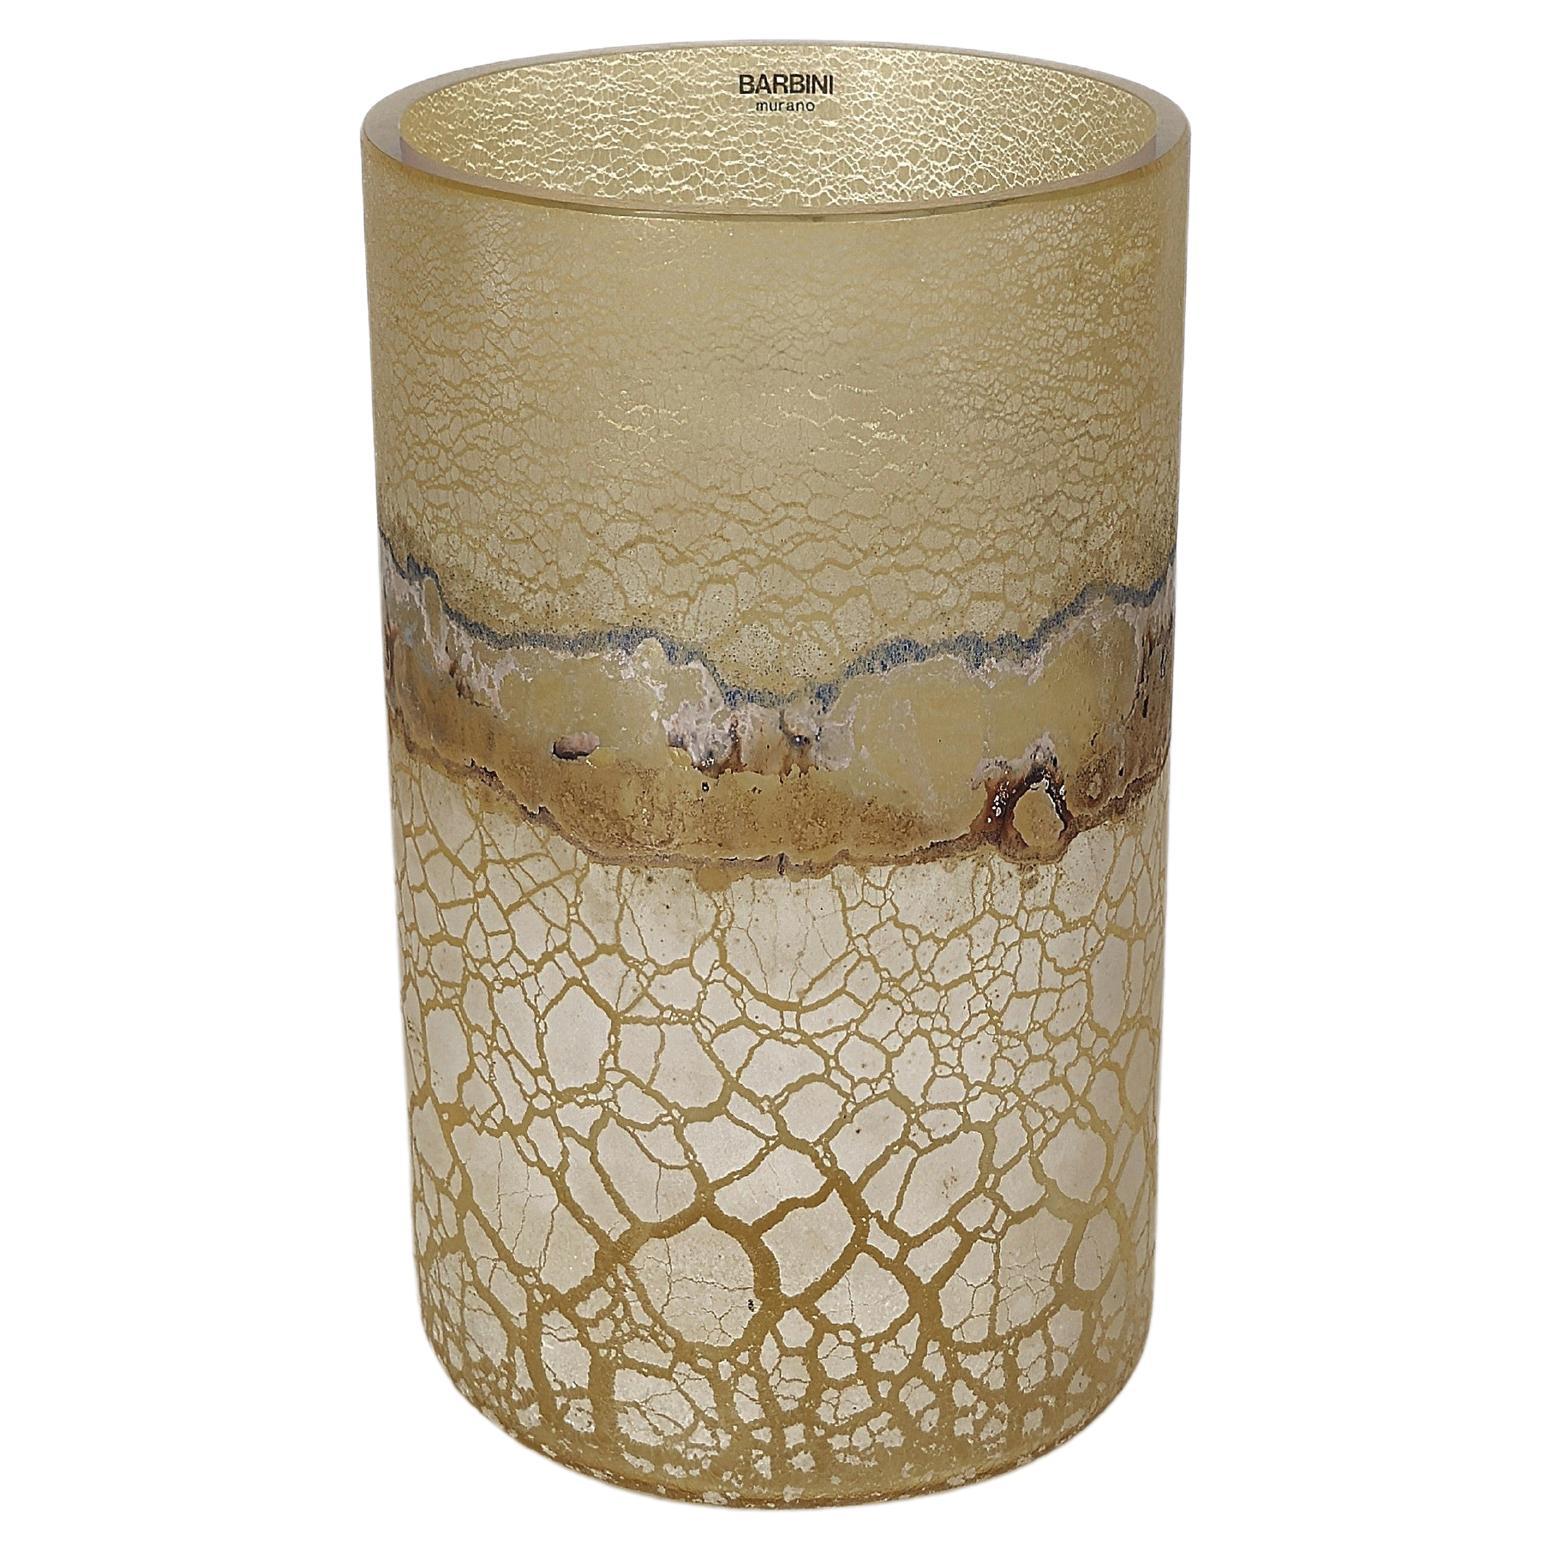 Vase Dekoratives Objekt Alfredo Barbini Murano Glas Midcentury Modern Italy 1960